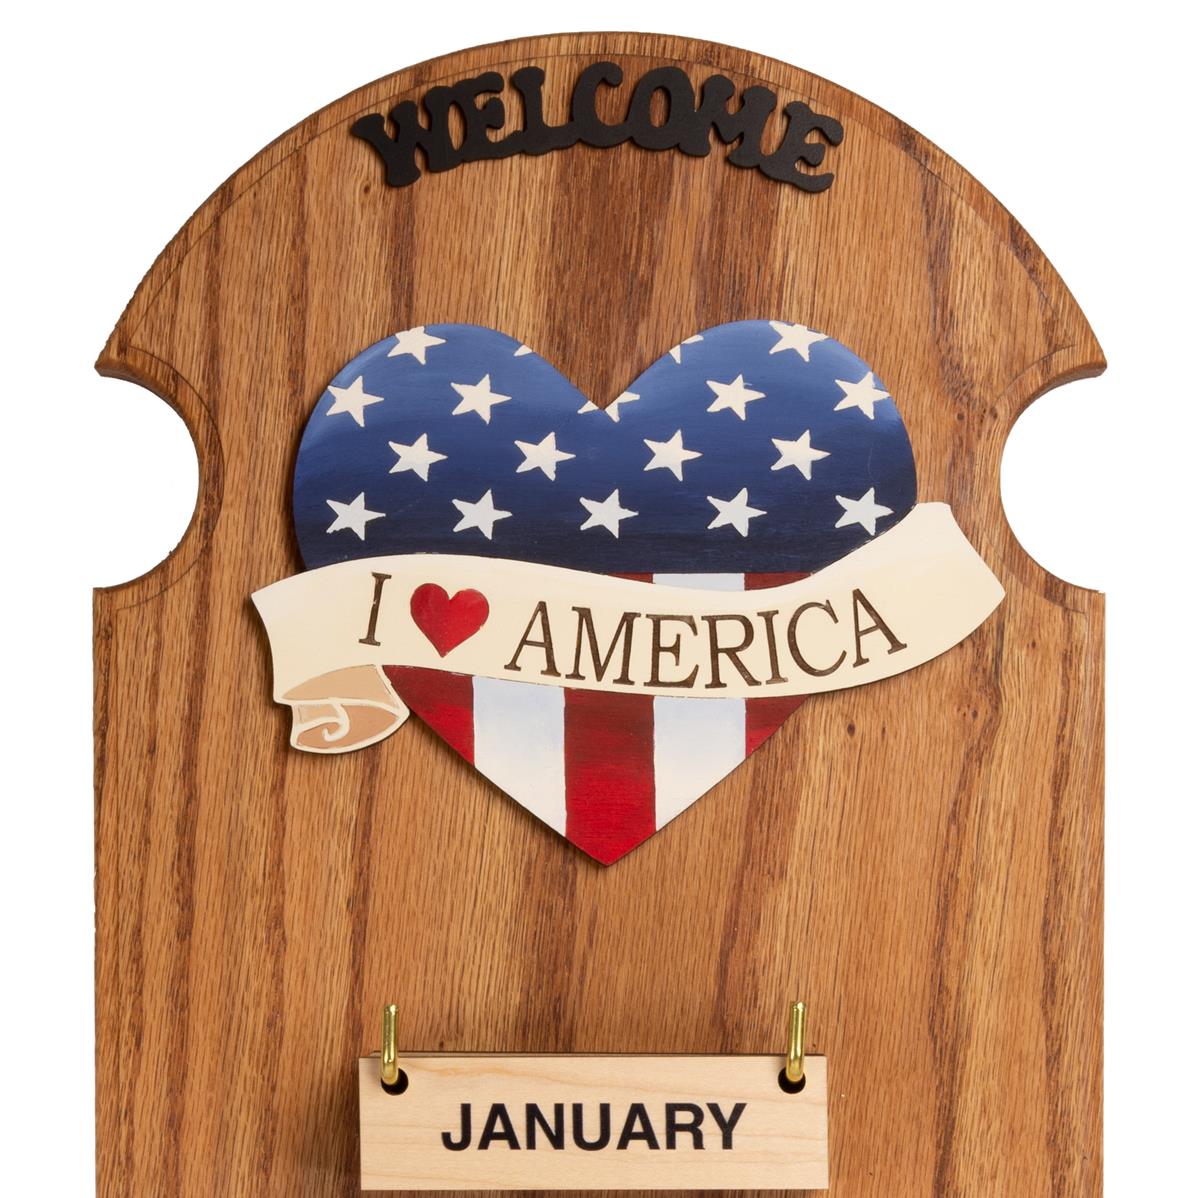 Americana
Wooden Perpetual Calendar